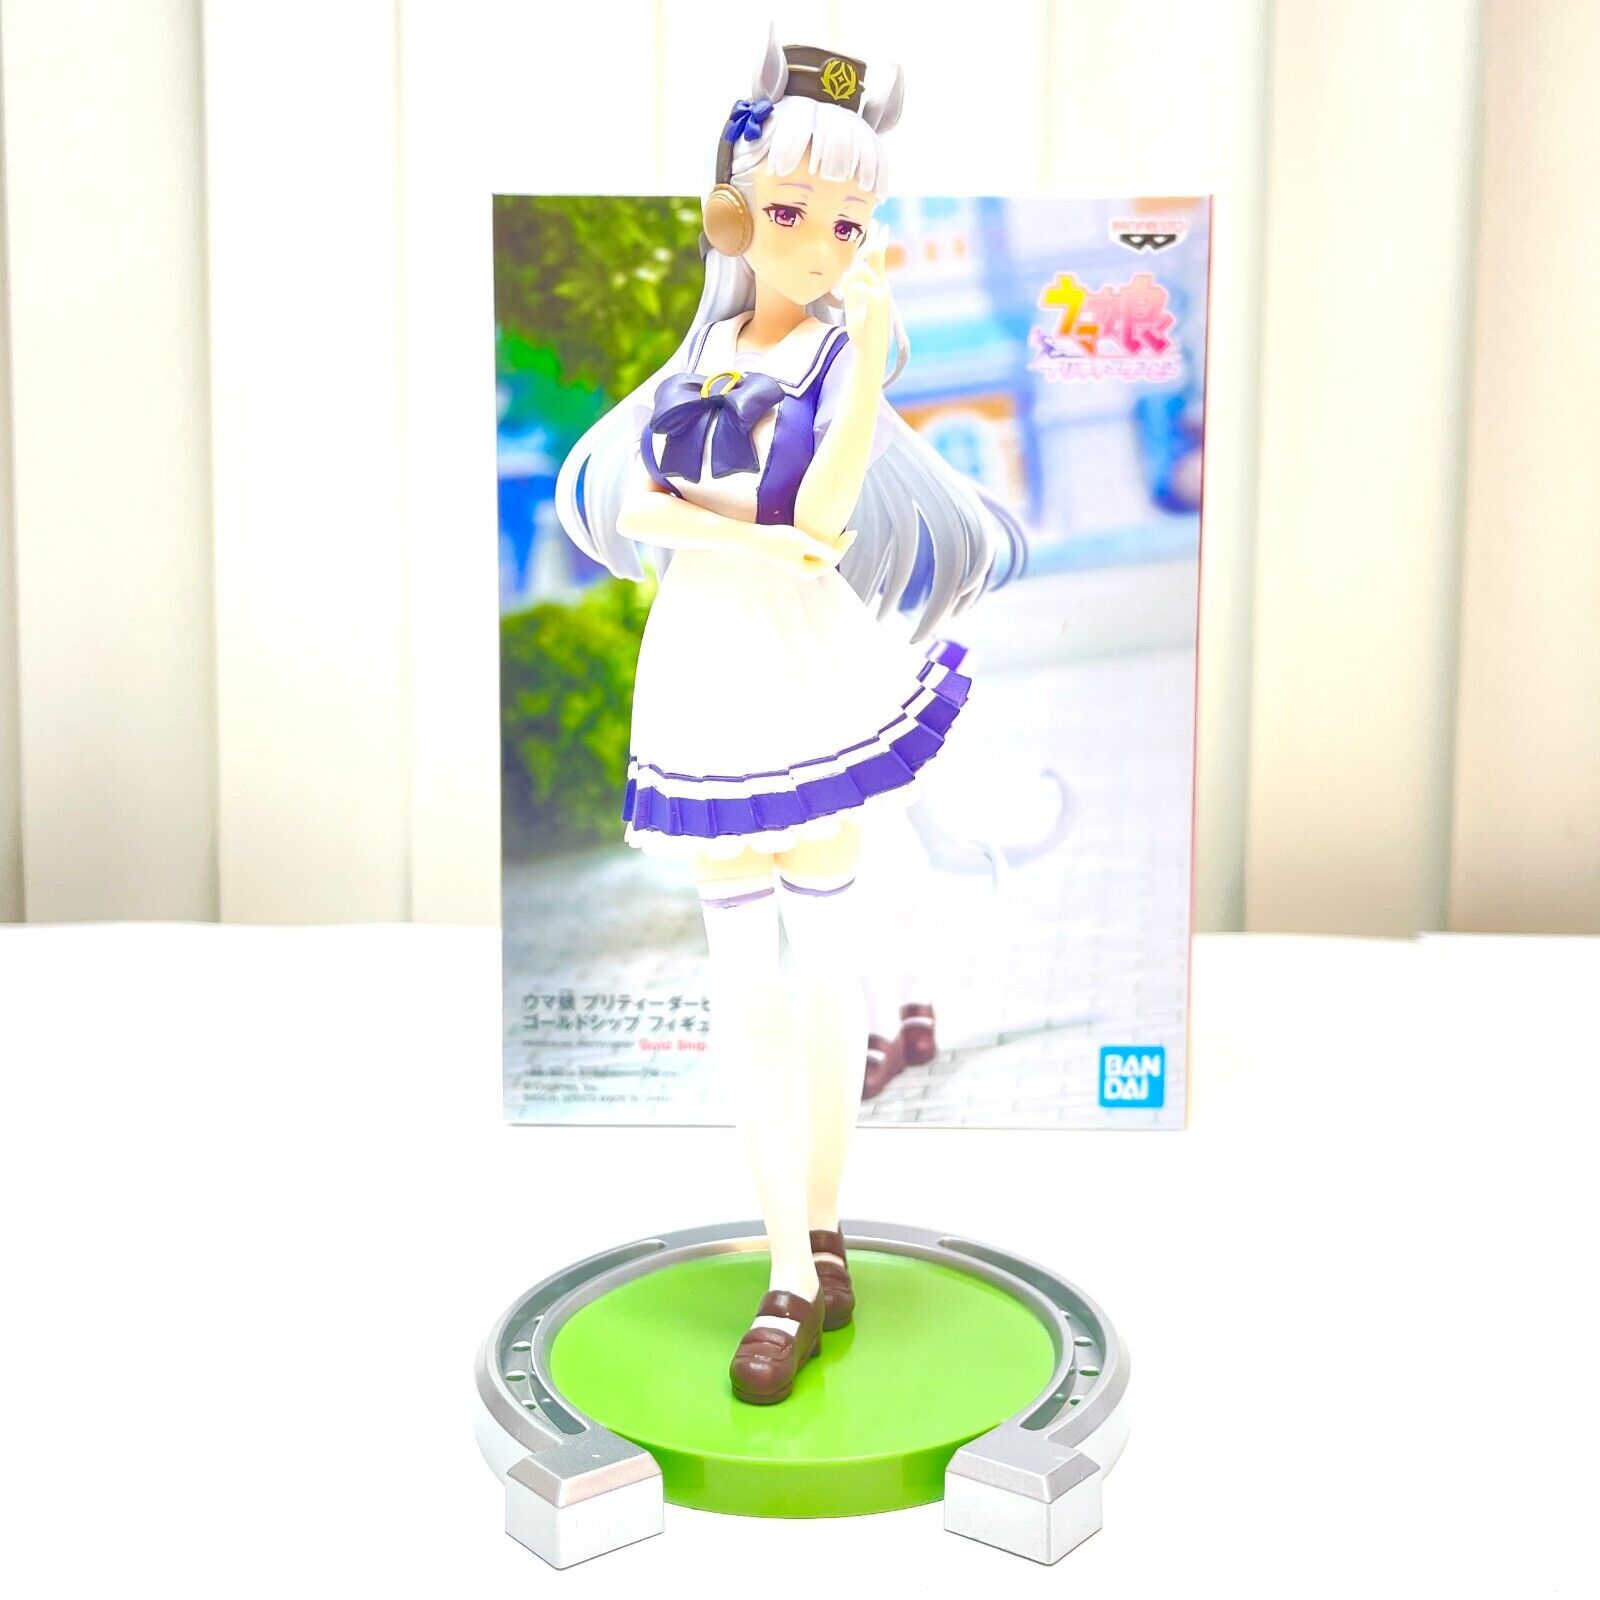 Banpresto Uma Musume Pretty Derby Anime Game Figure Toy Gold Ship BP18698